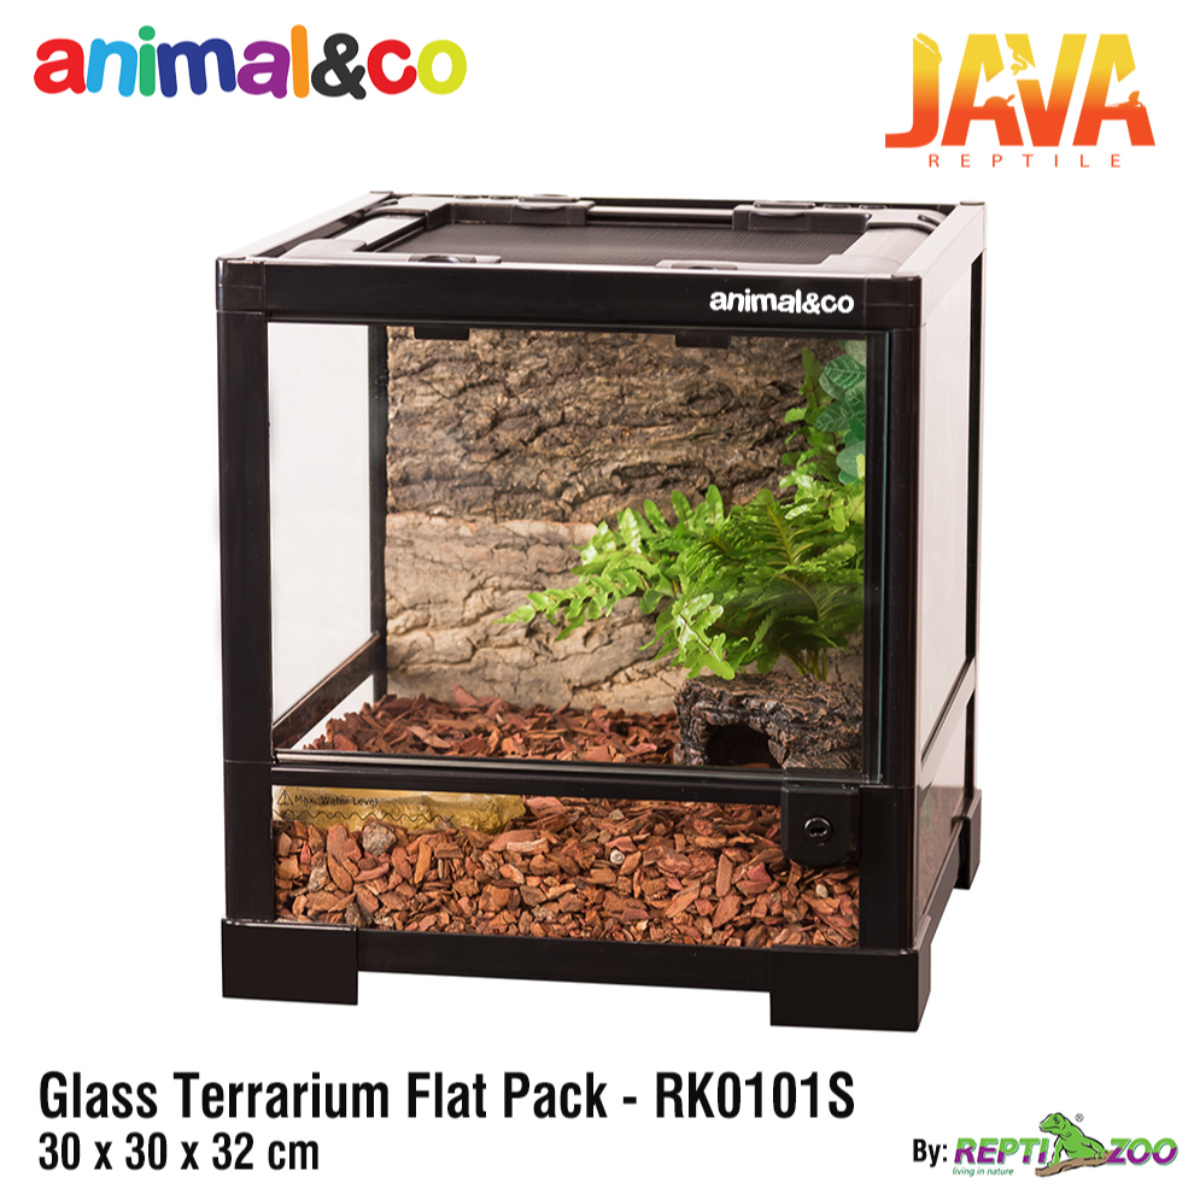 Animal&co Glass Terrarium 30x30x32cm by Reptizoo RK0101S